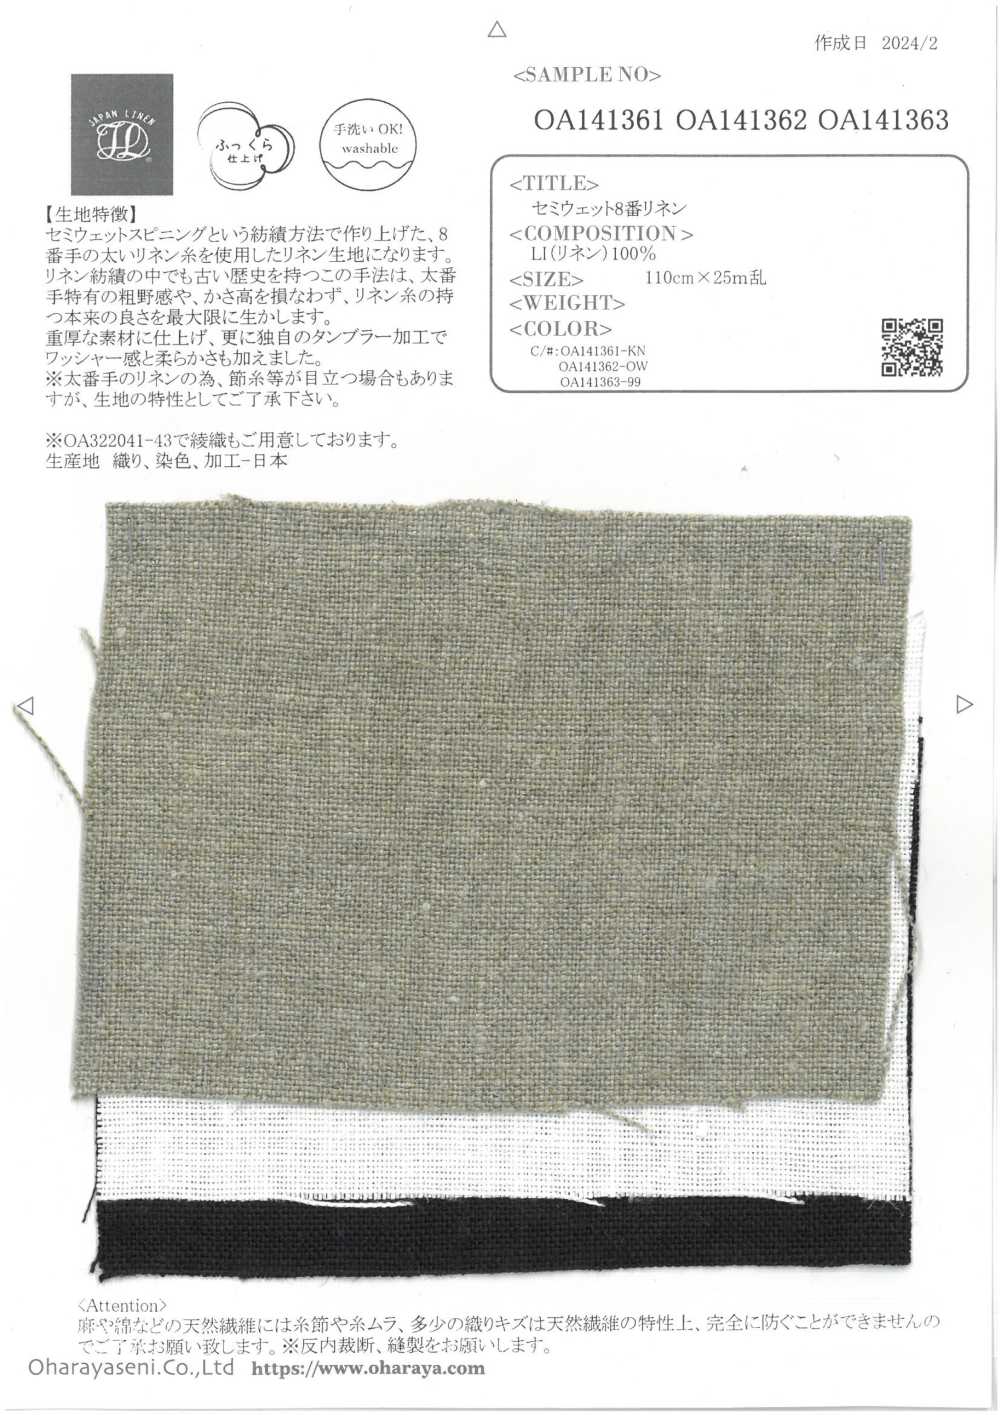 OA141363 Lino Semihúmedo N°8[Fabrica Textil] Oharayaseni